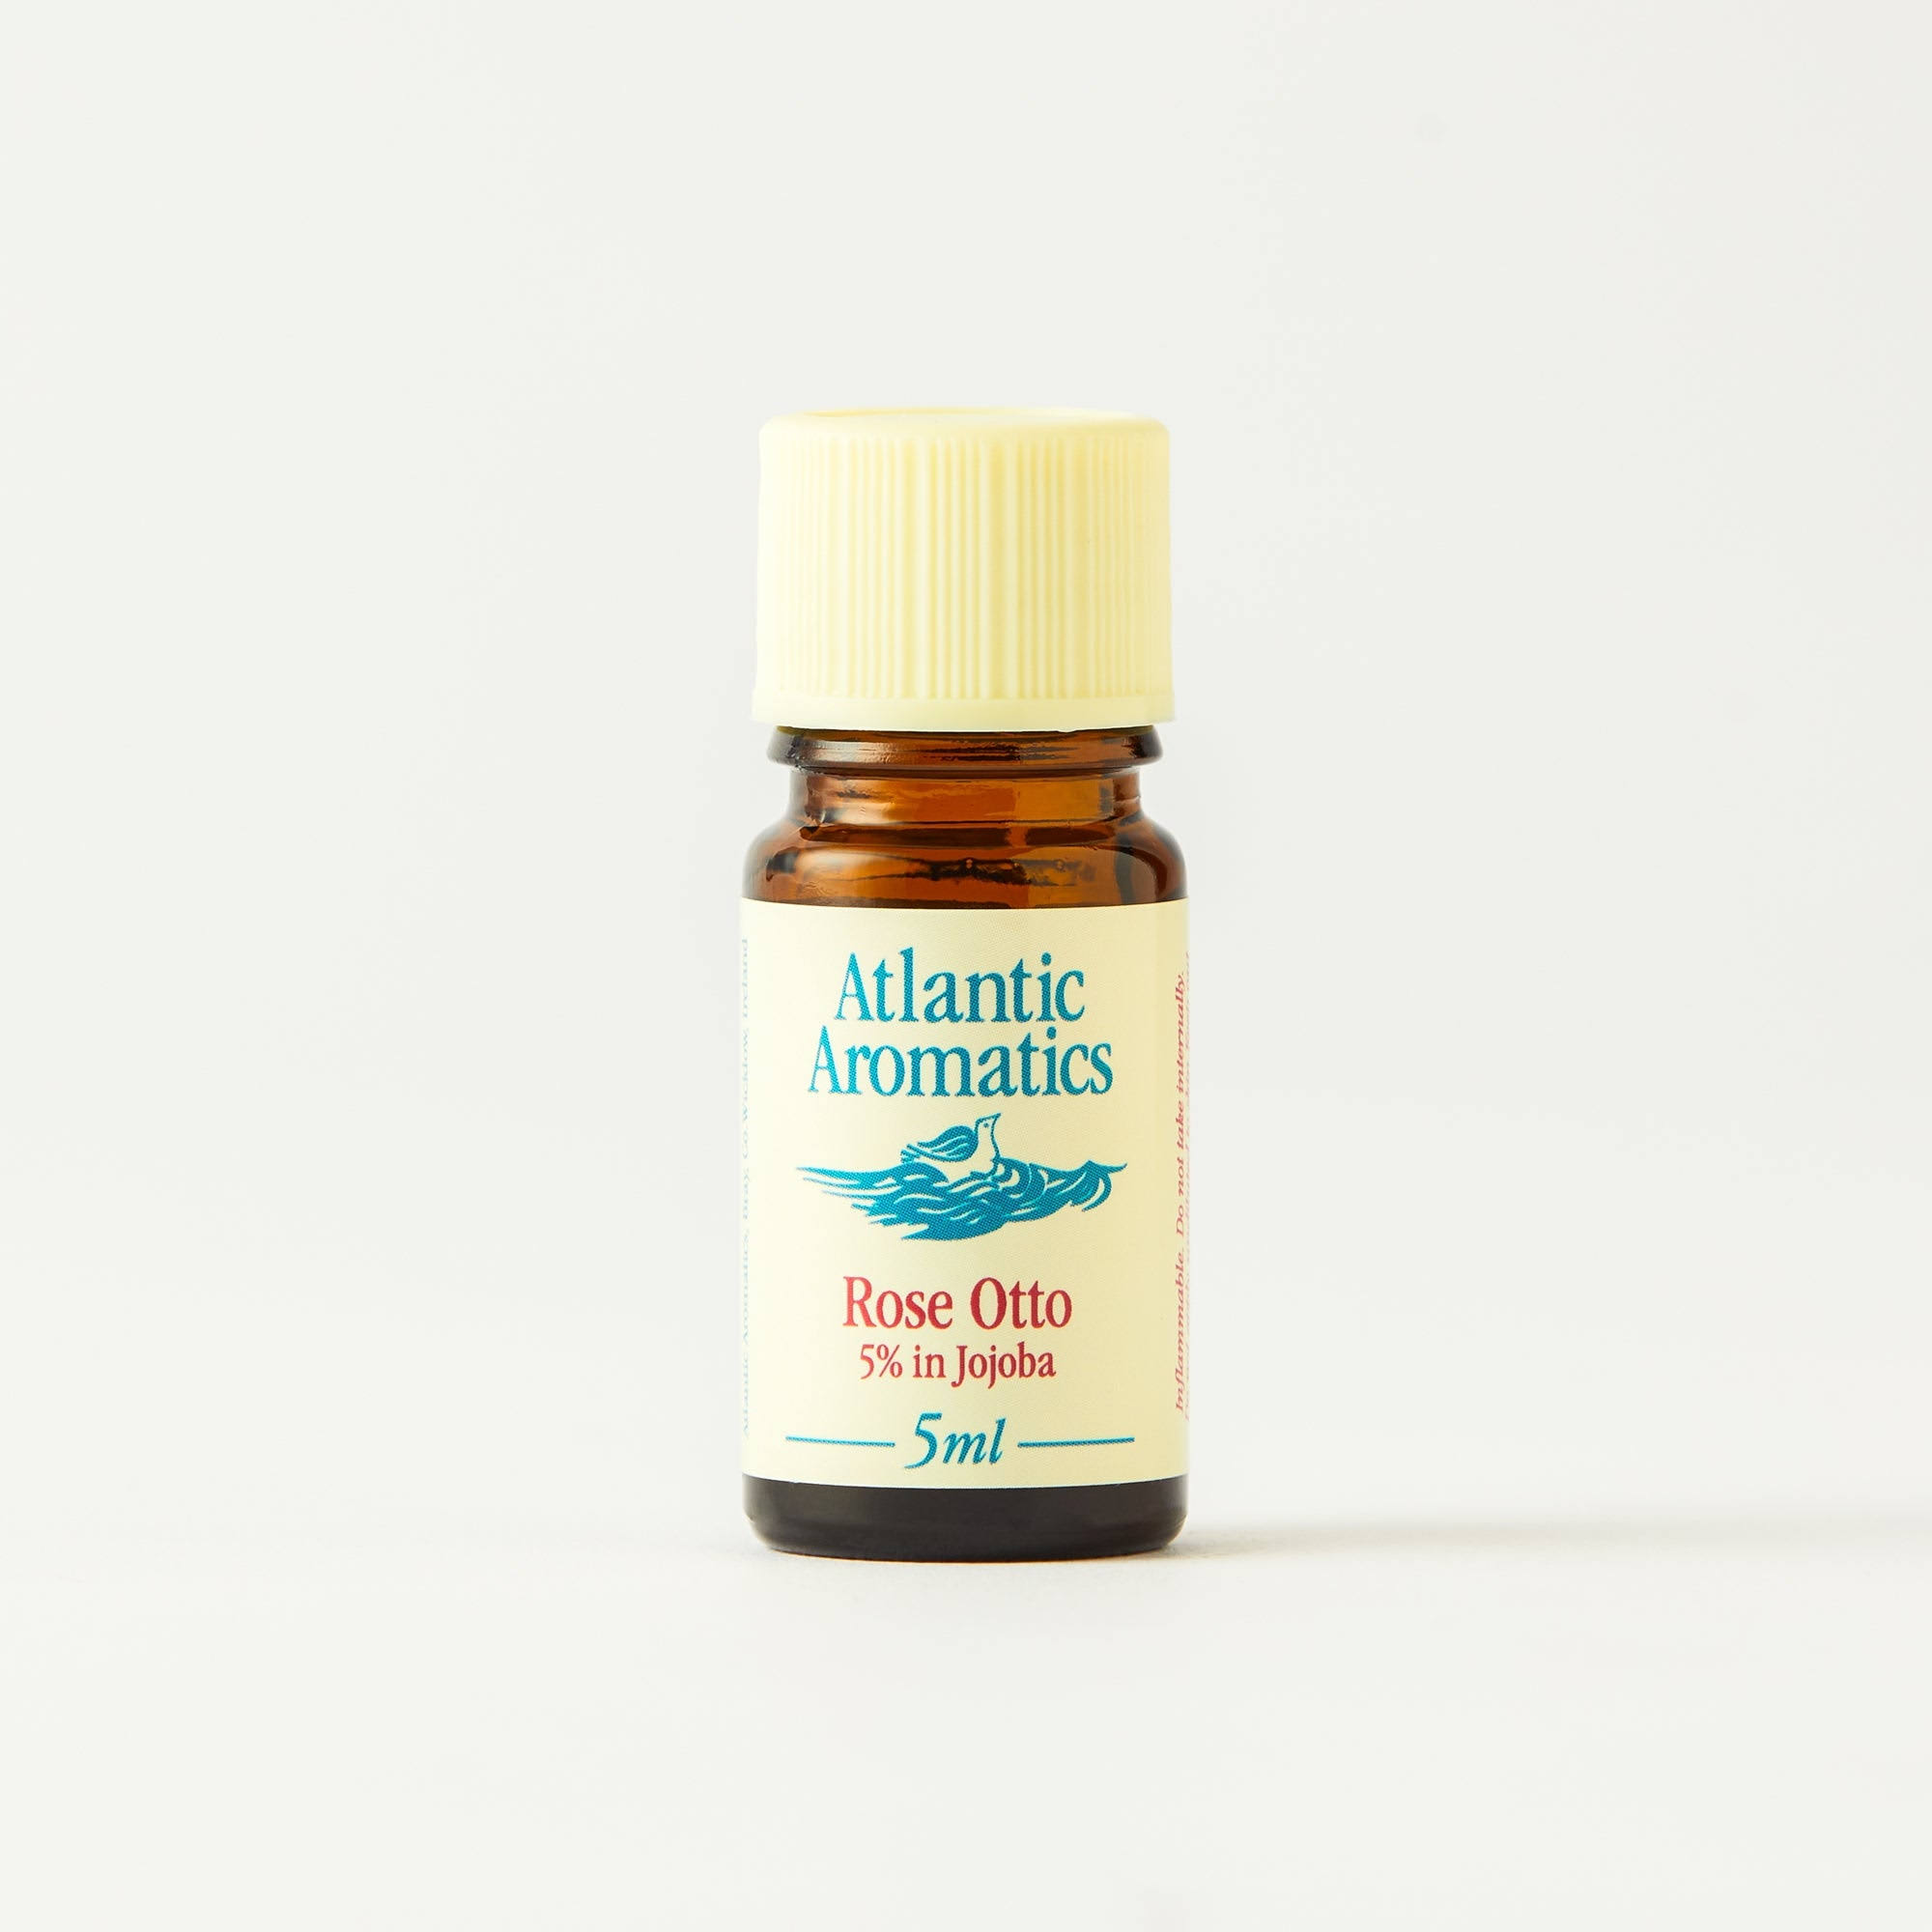 Atlantic Aromatics Rose Otto in 5% Jojoba - 5ml